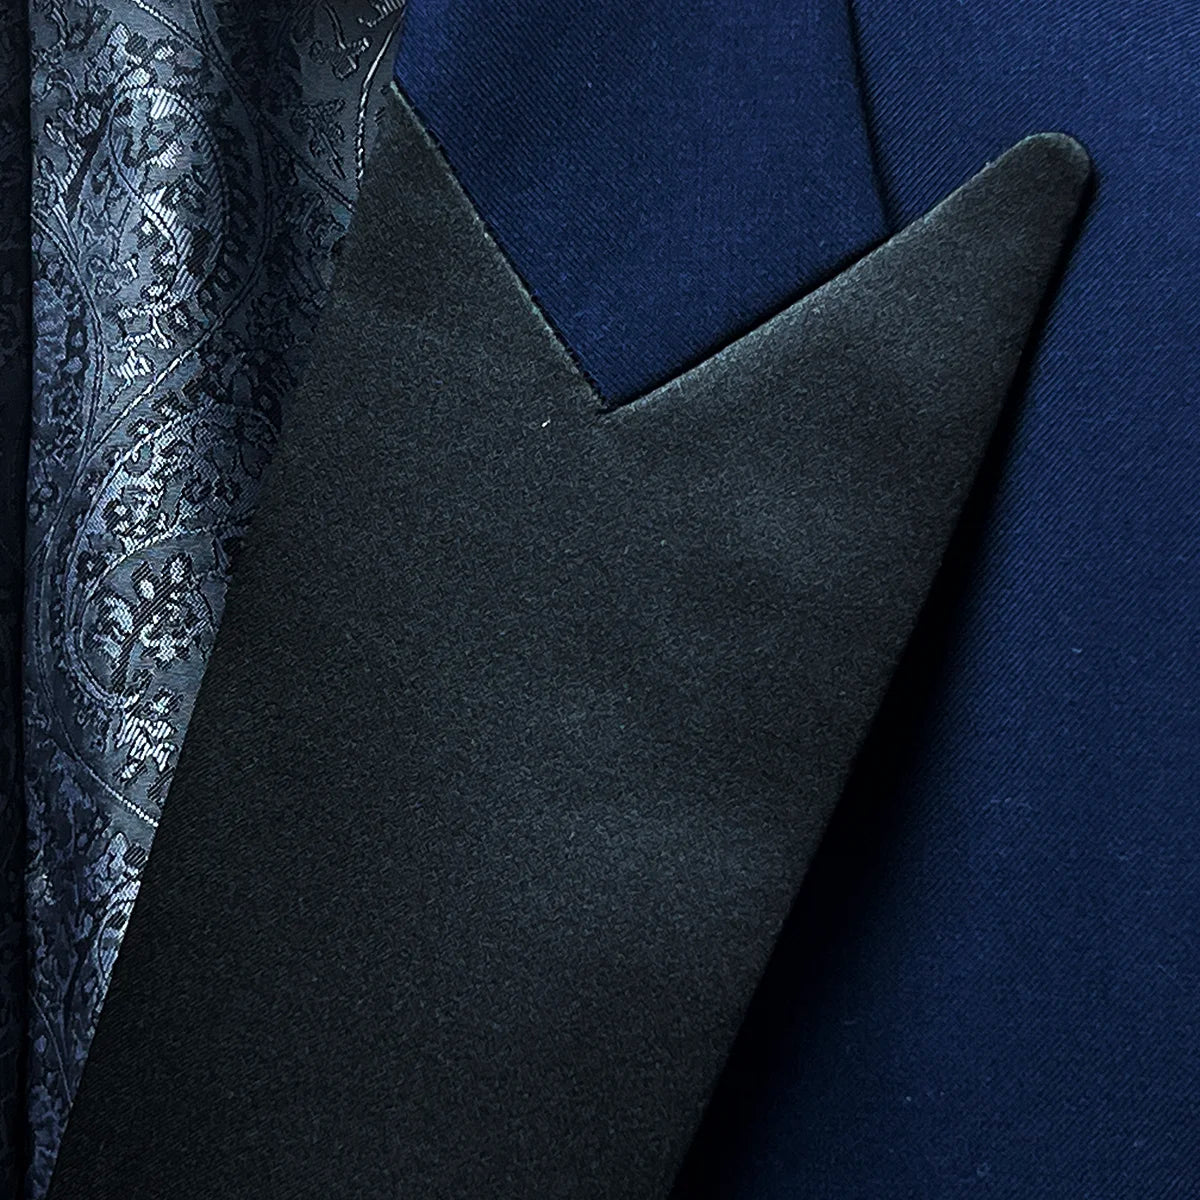 Close-up of the peak lapel, emphasizing the elegant black satin facing and precise tailoring.